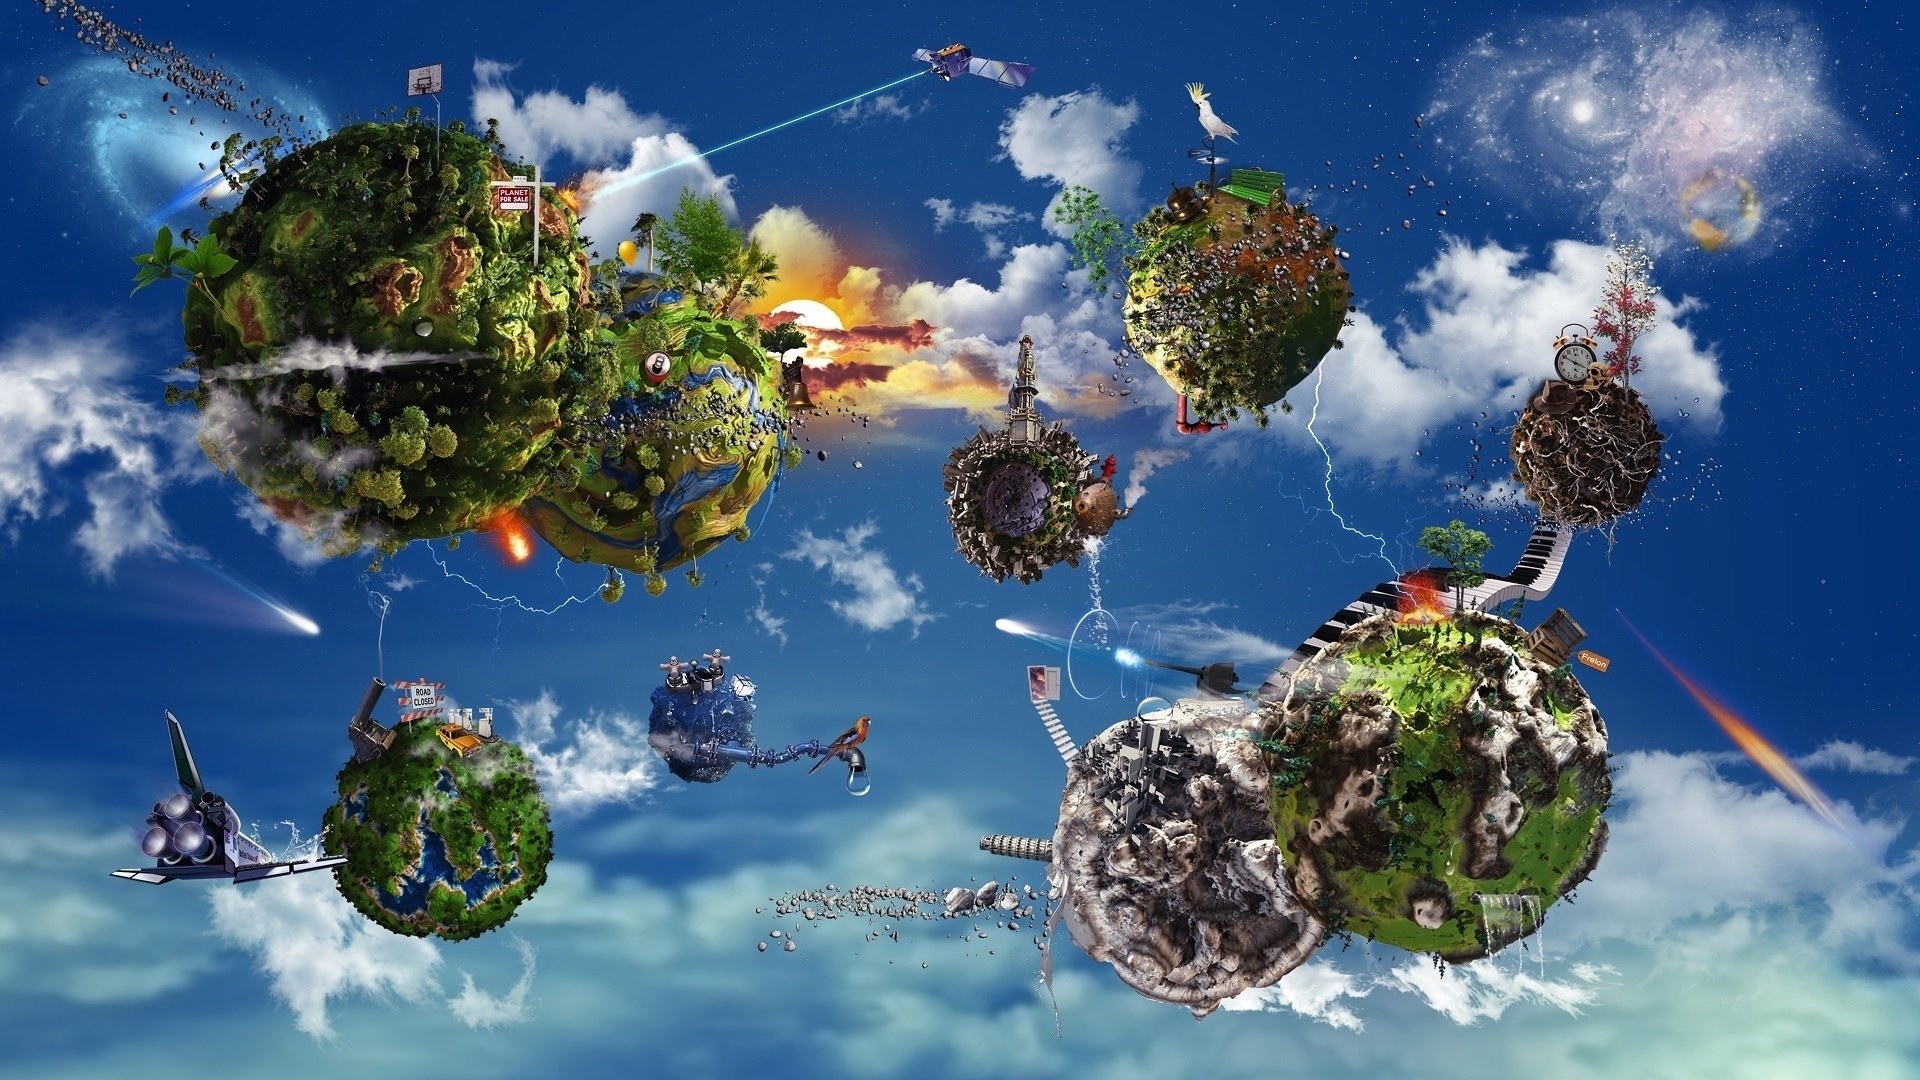 spaceship, Planet, Satellite, Sky, Clouds, Digital art, Photo manipulation, Comet Wallpaper